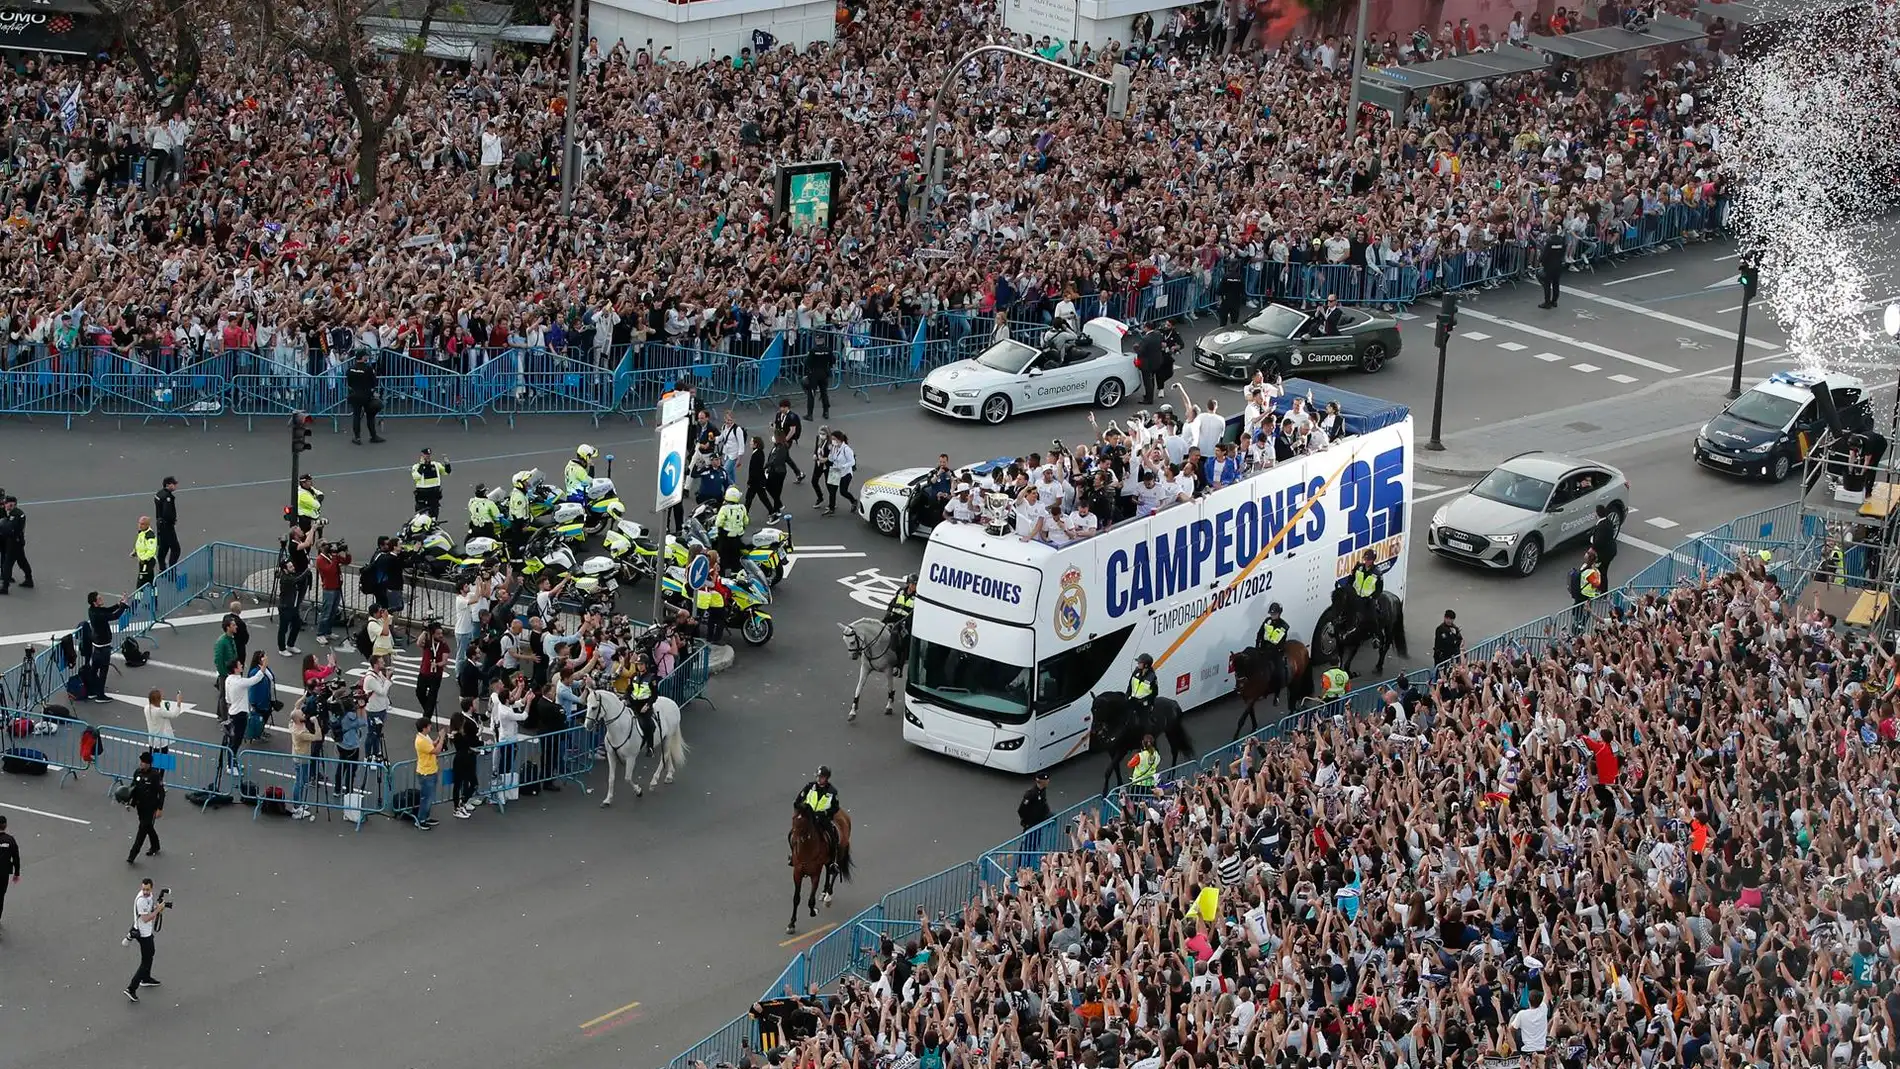 Los jugadores del Real Madrid llegan a la plaza de Cibeles, en Madrid